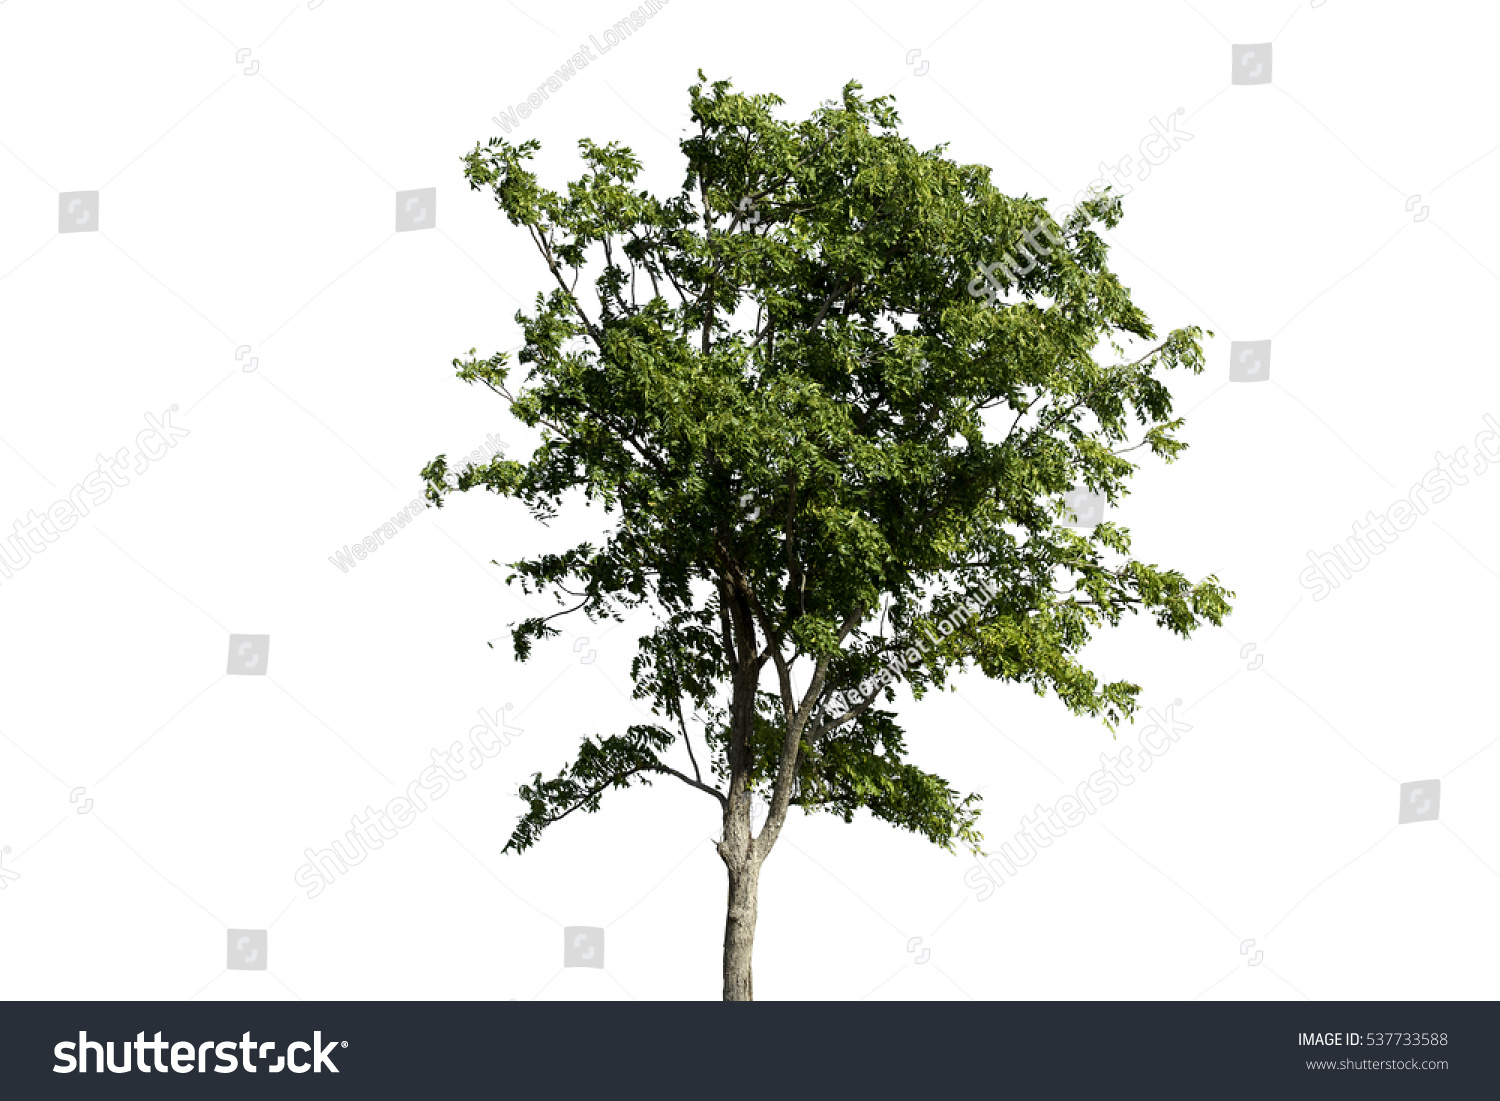 Tree Stock Photo 537733588 : Shutterstock